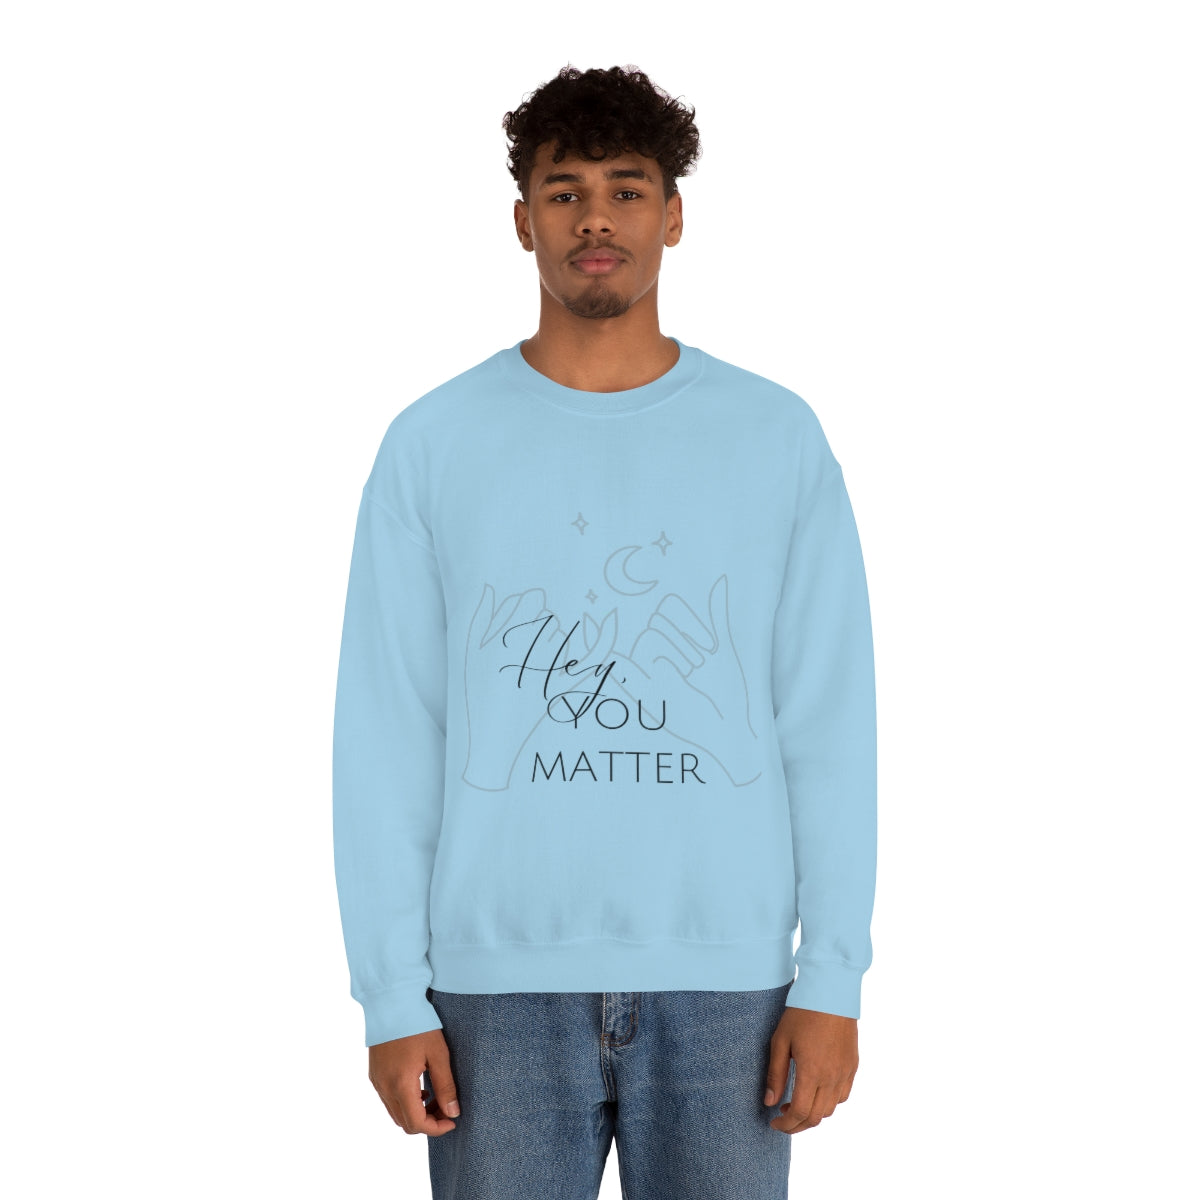 You matter Unisex Heavy Blend™ Crewneck Sweatshirt